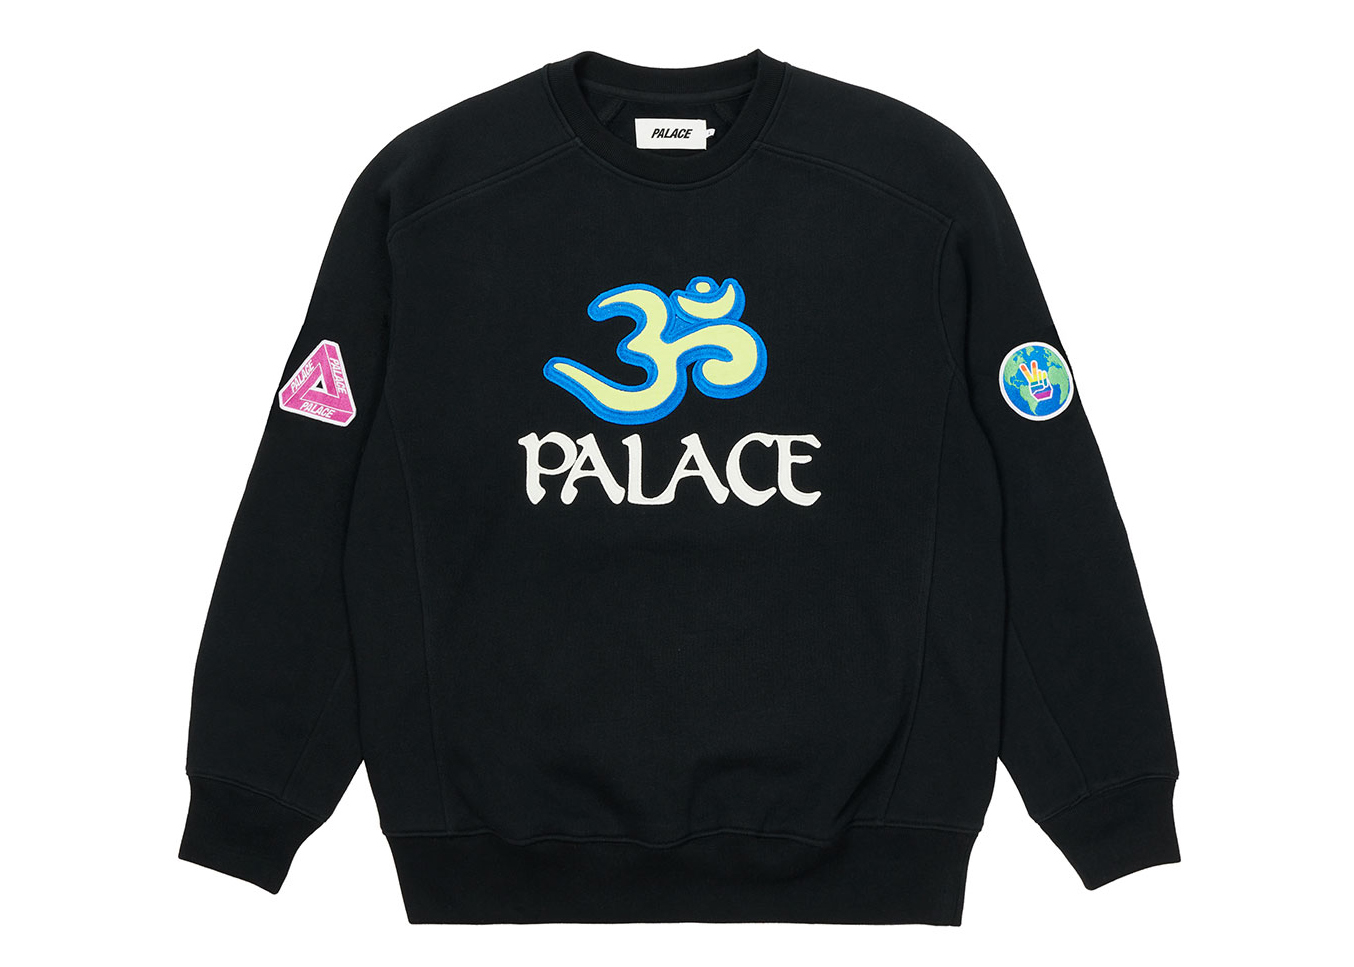 Palace OM Crew Black - SS21 Men's - US